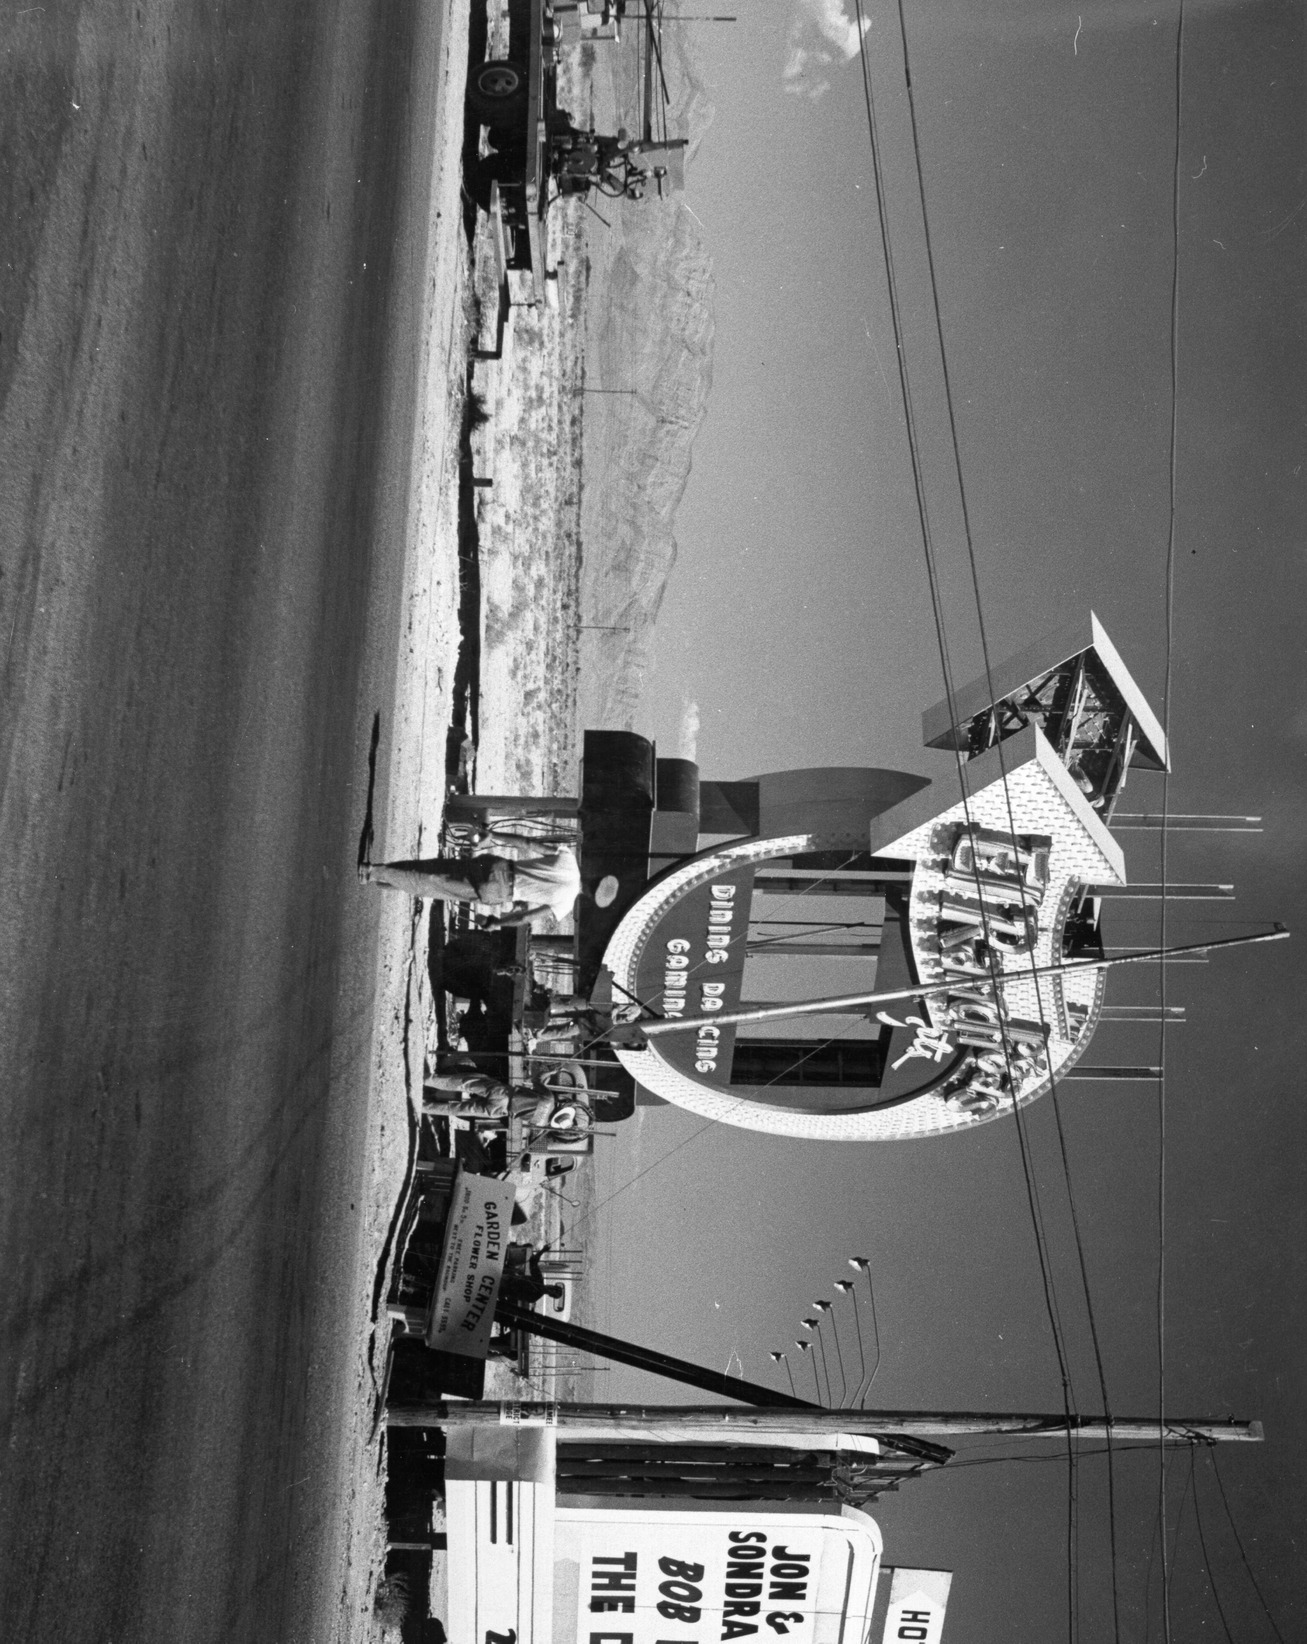 Photograph of the installation of a neon sign for El Rancho Vegas (Las Vegas), 1941